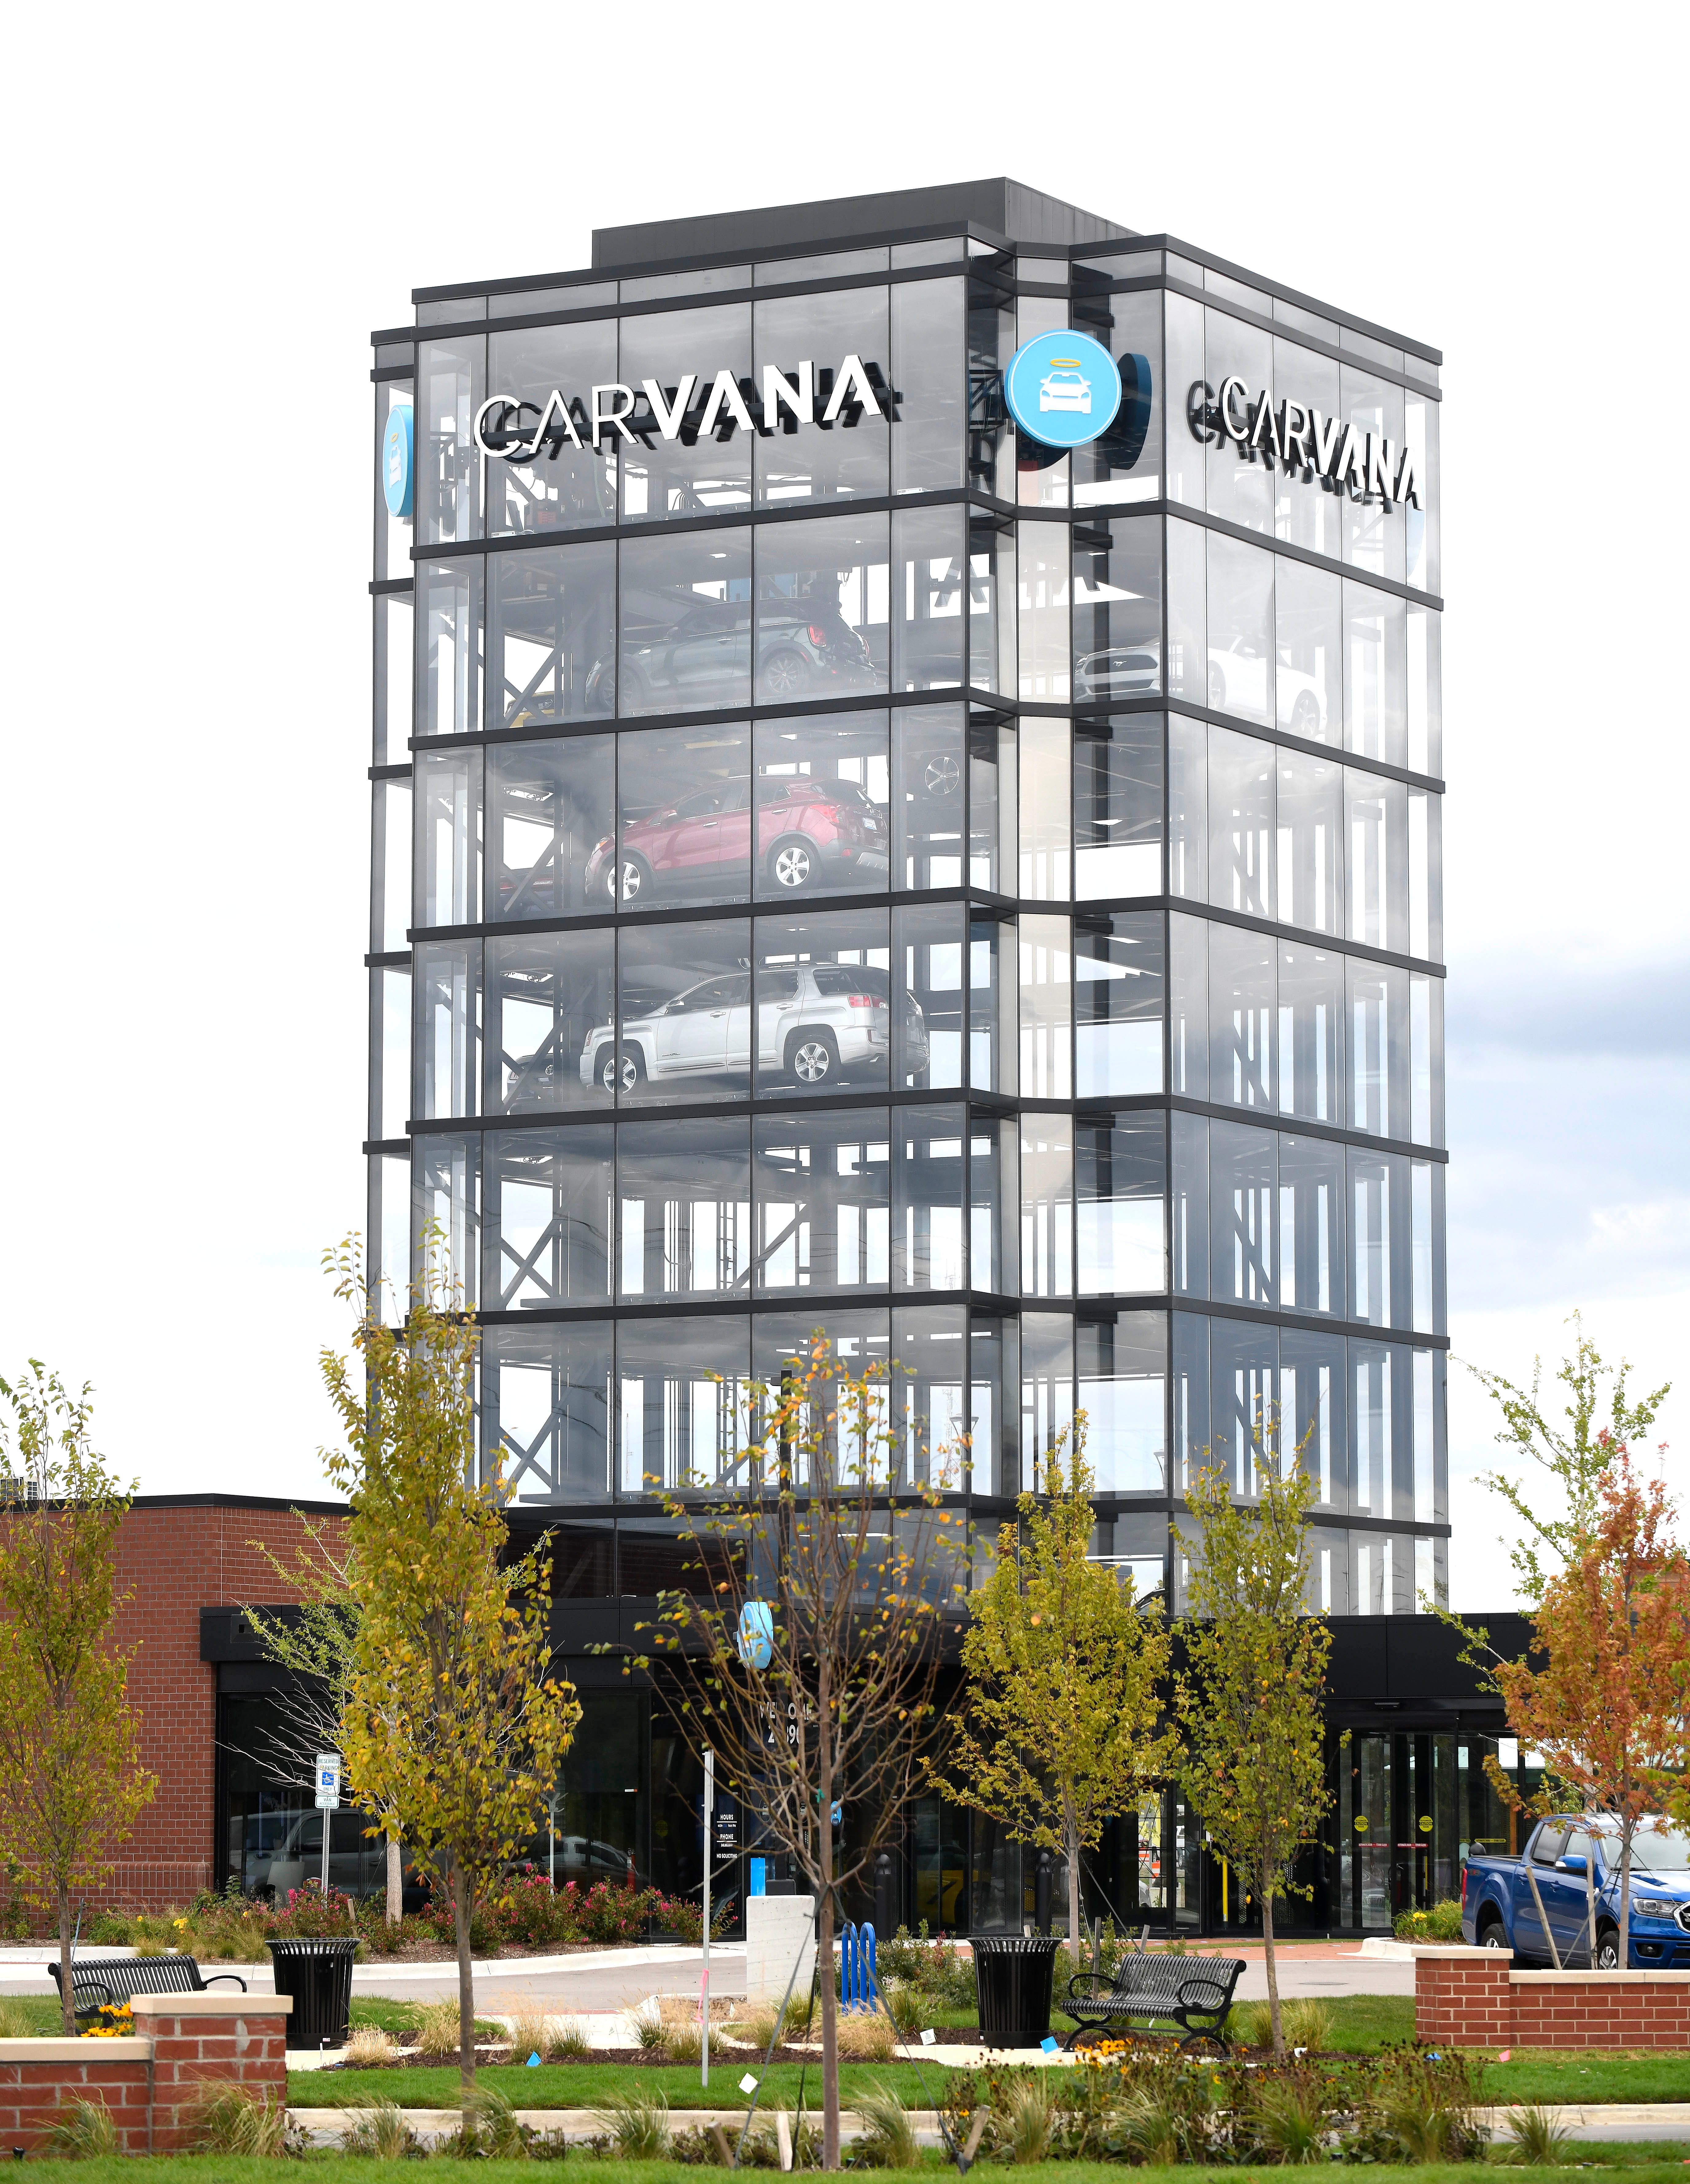 Online retailer Carvana debuts car vending machine in Novi